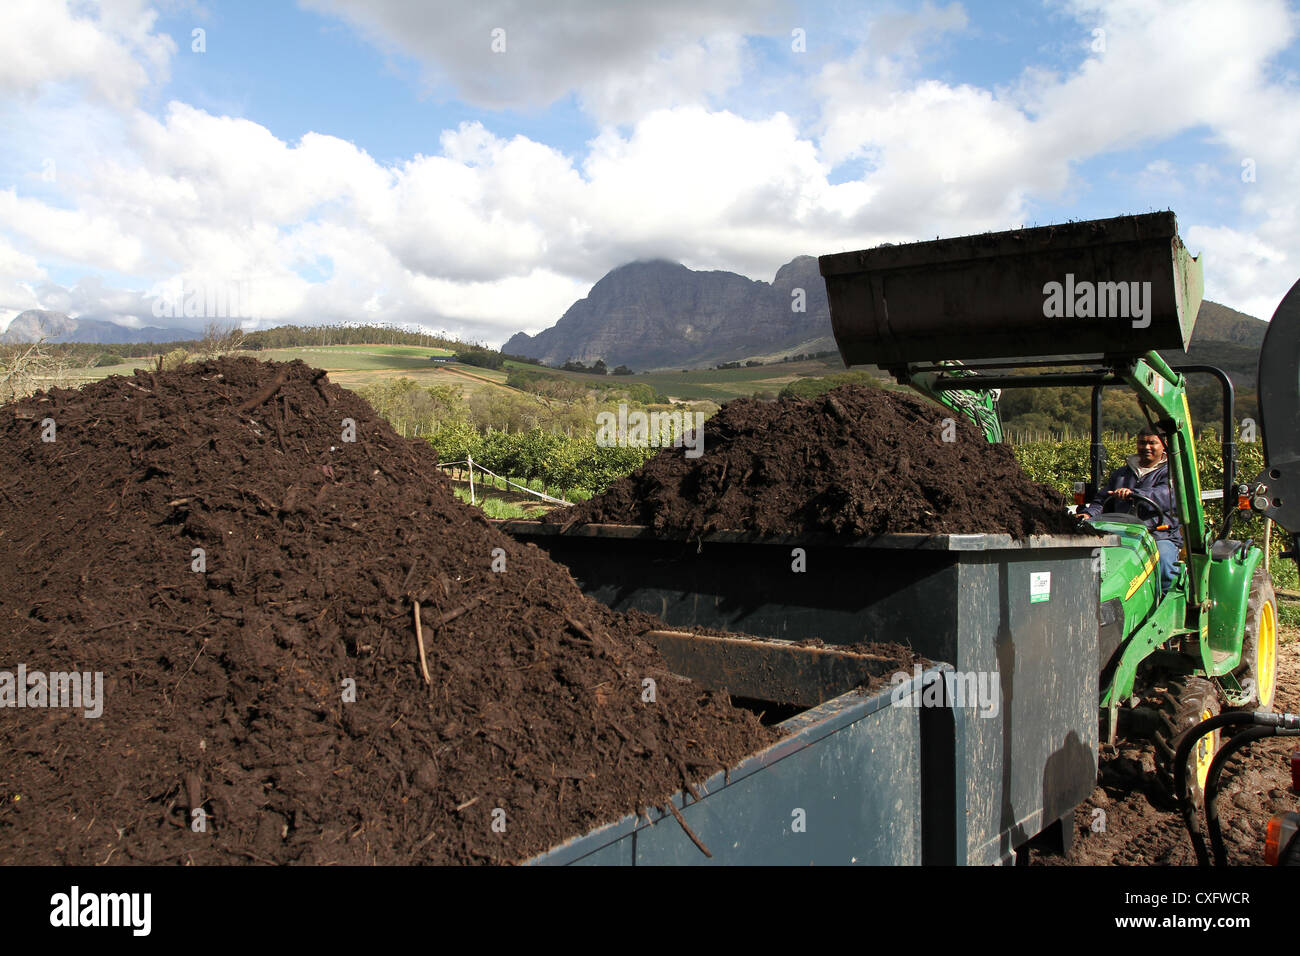 Labourers tip compost onto a wagon trailer, Stellenbosch, South Africa Stock Photo